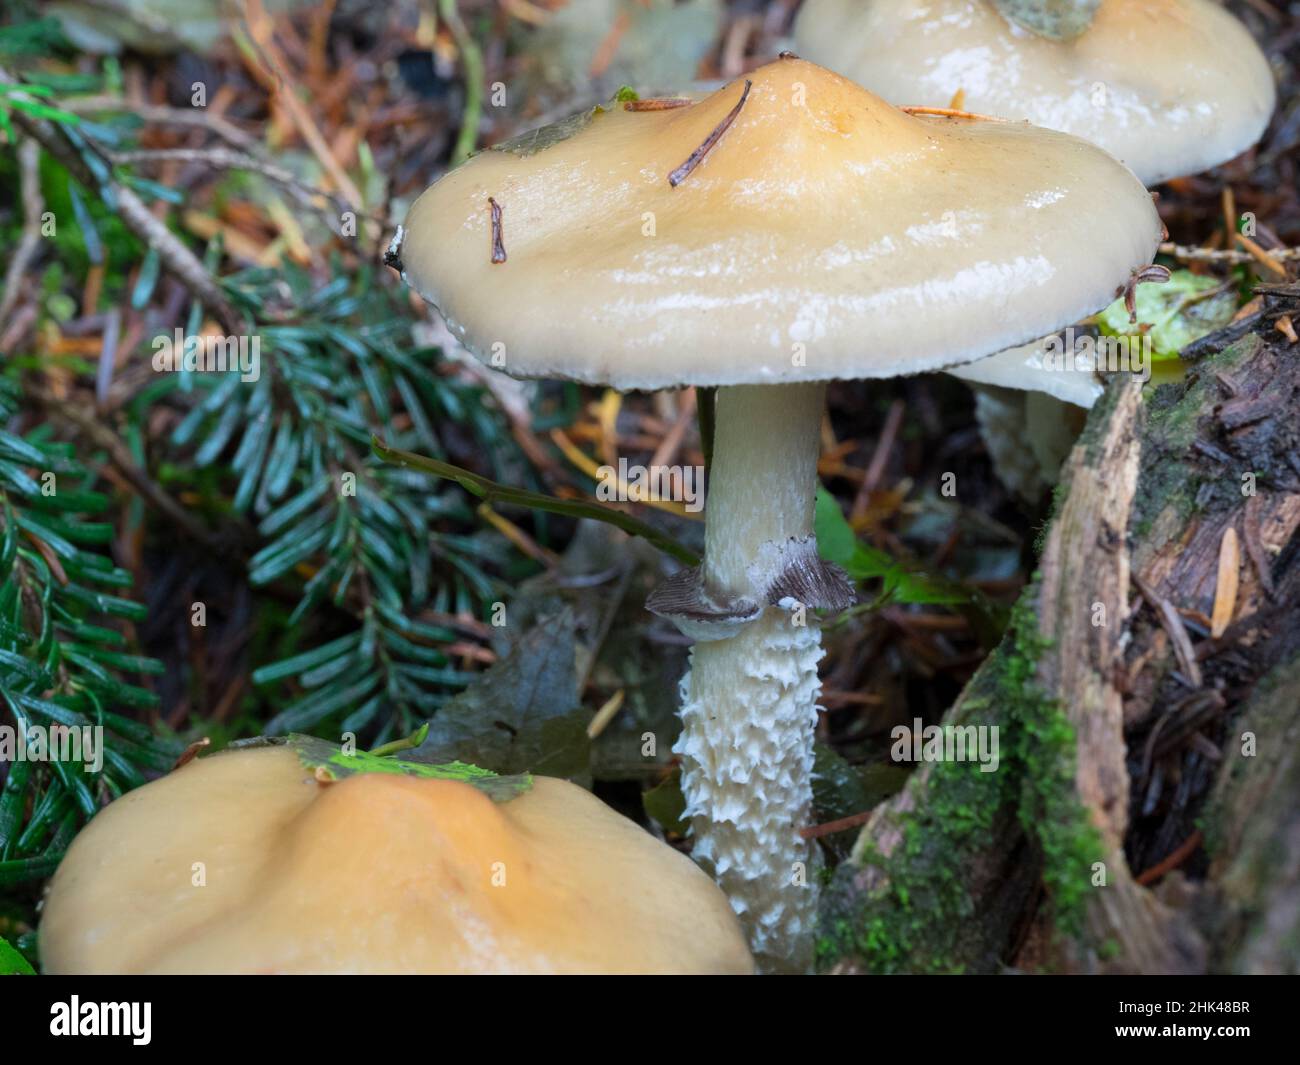 USA, Washington State. Central Cascades, blushing fiber head mushroom. Stock Photo